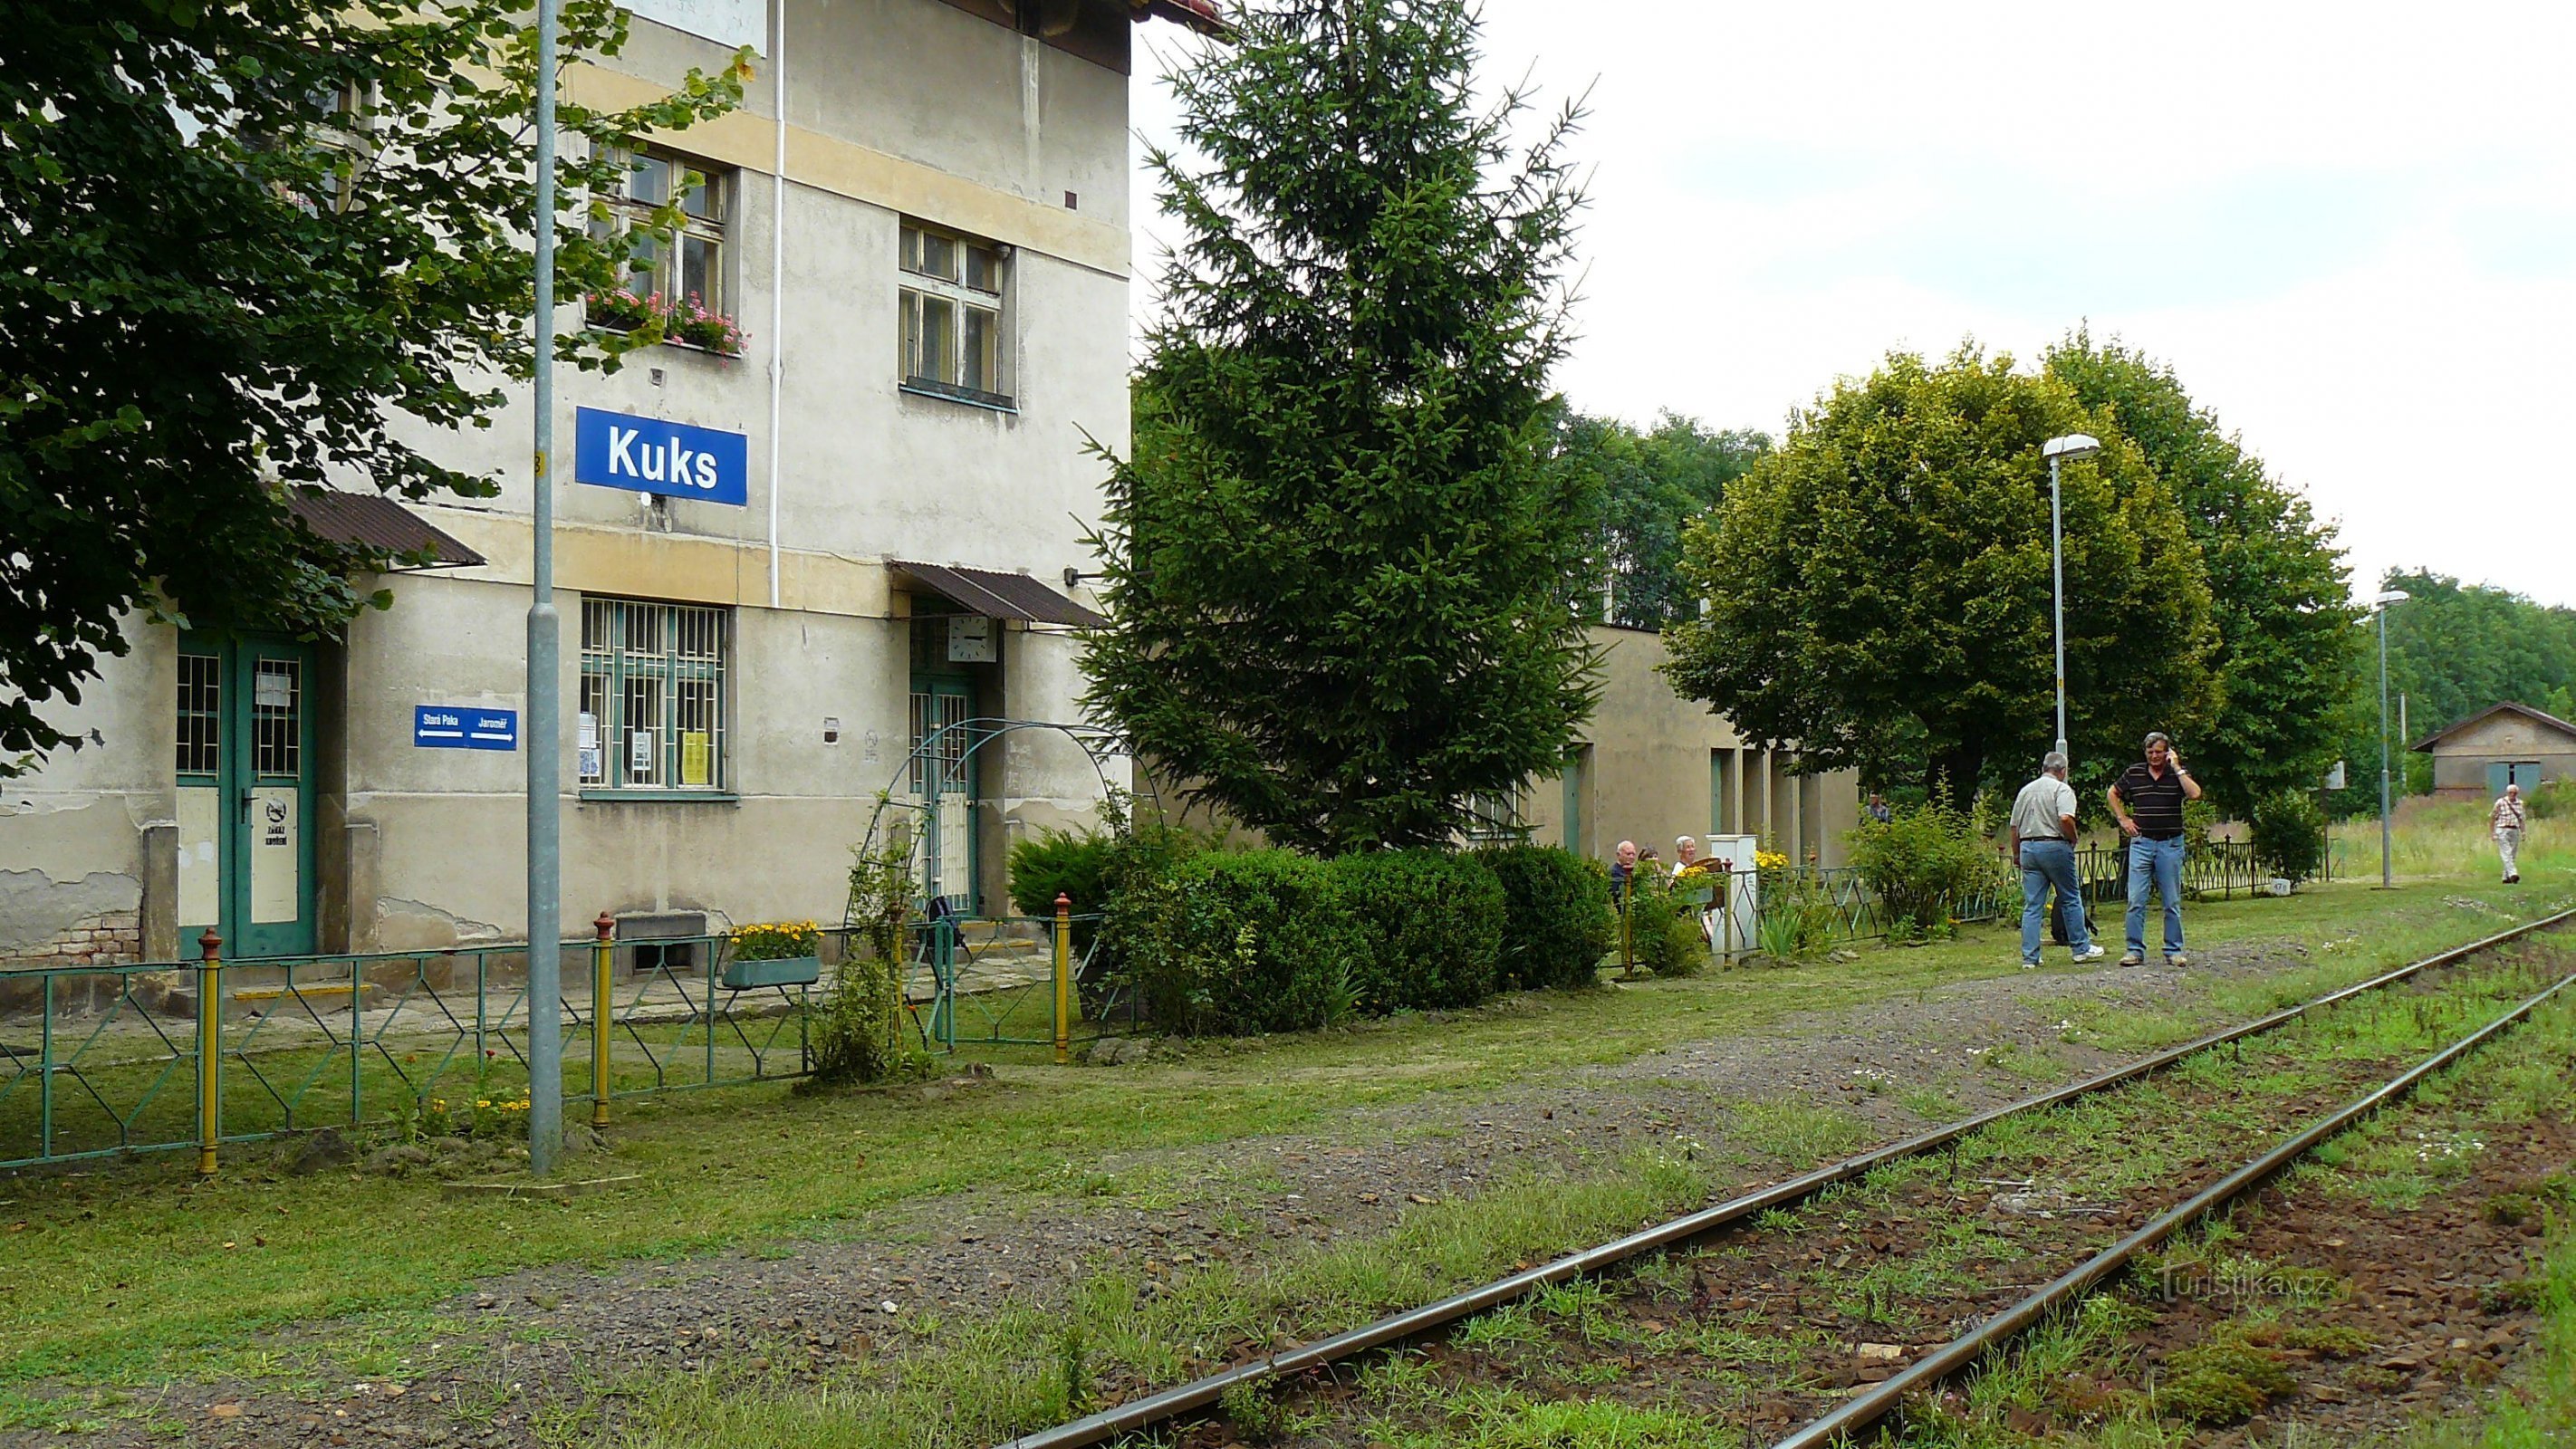 Stazione ferroviaria di Kuks